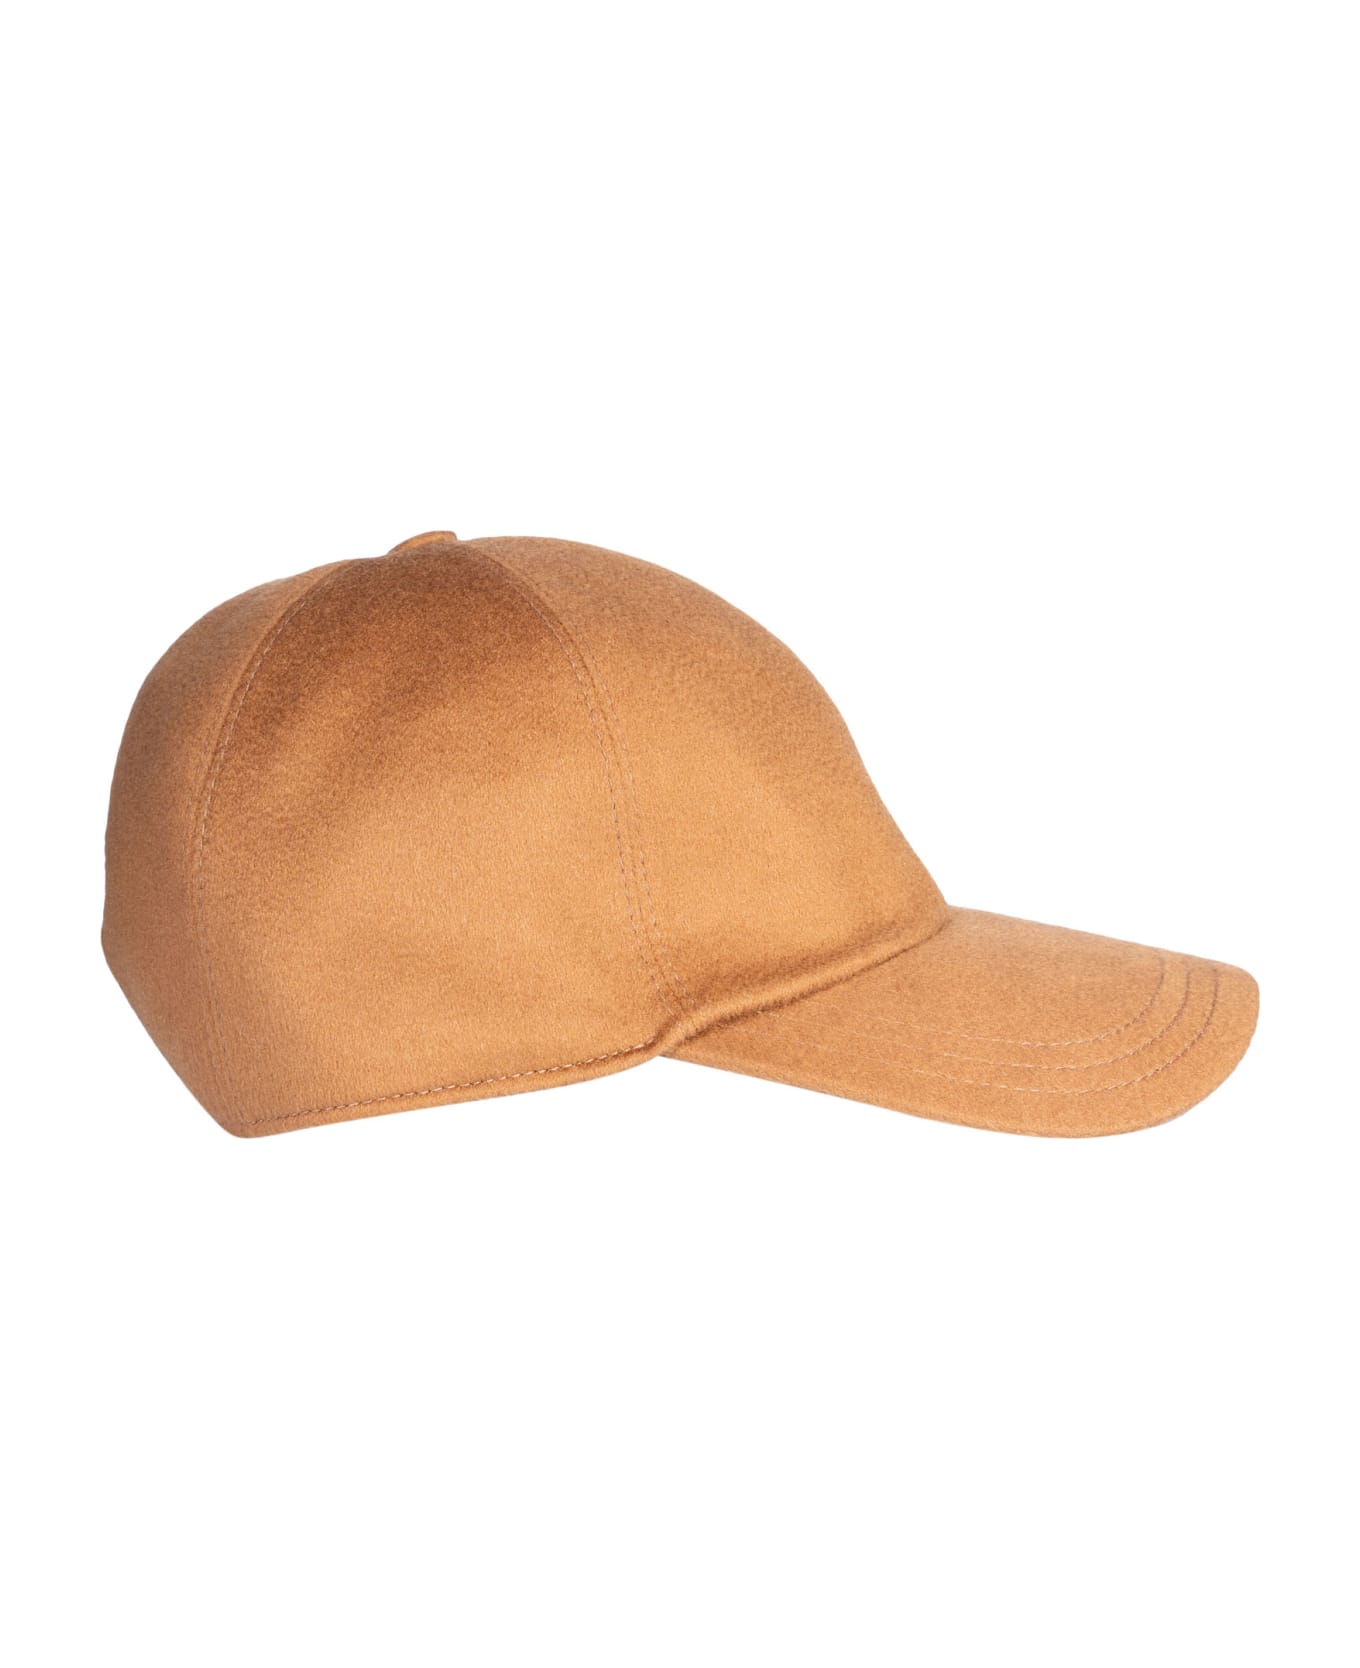 Zegna Classic Fitted Baseball Cap - Vjc 帽子